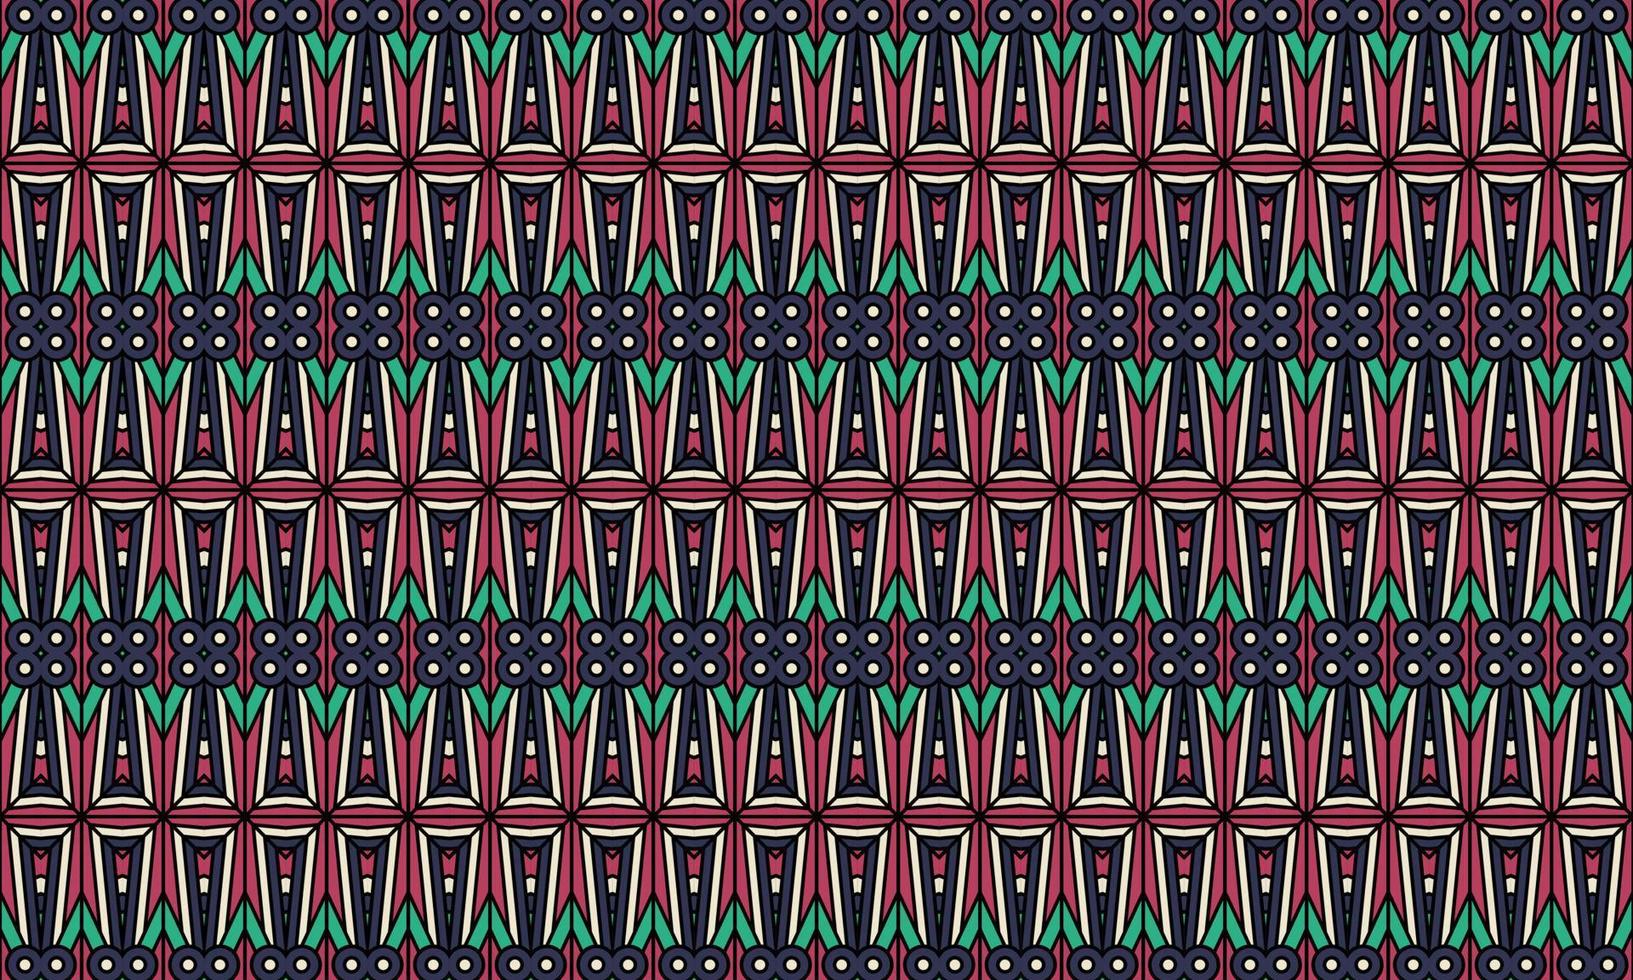 elegant modern batik etnisch patroon achtergrond vector